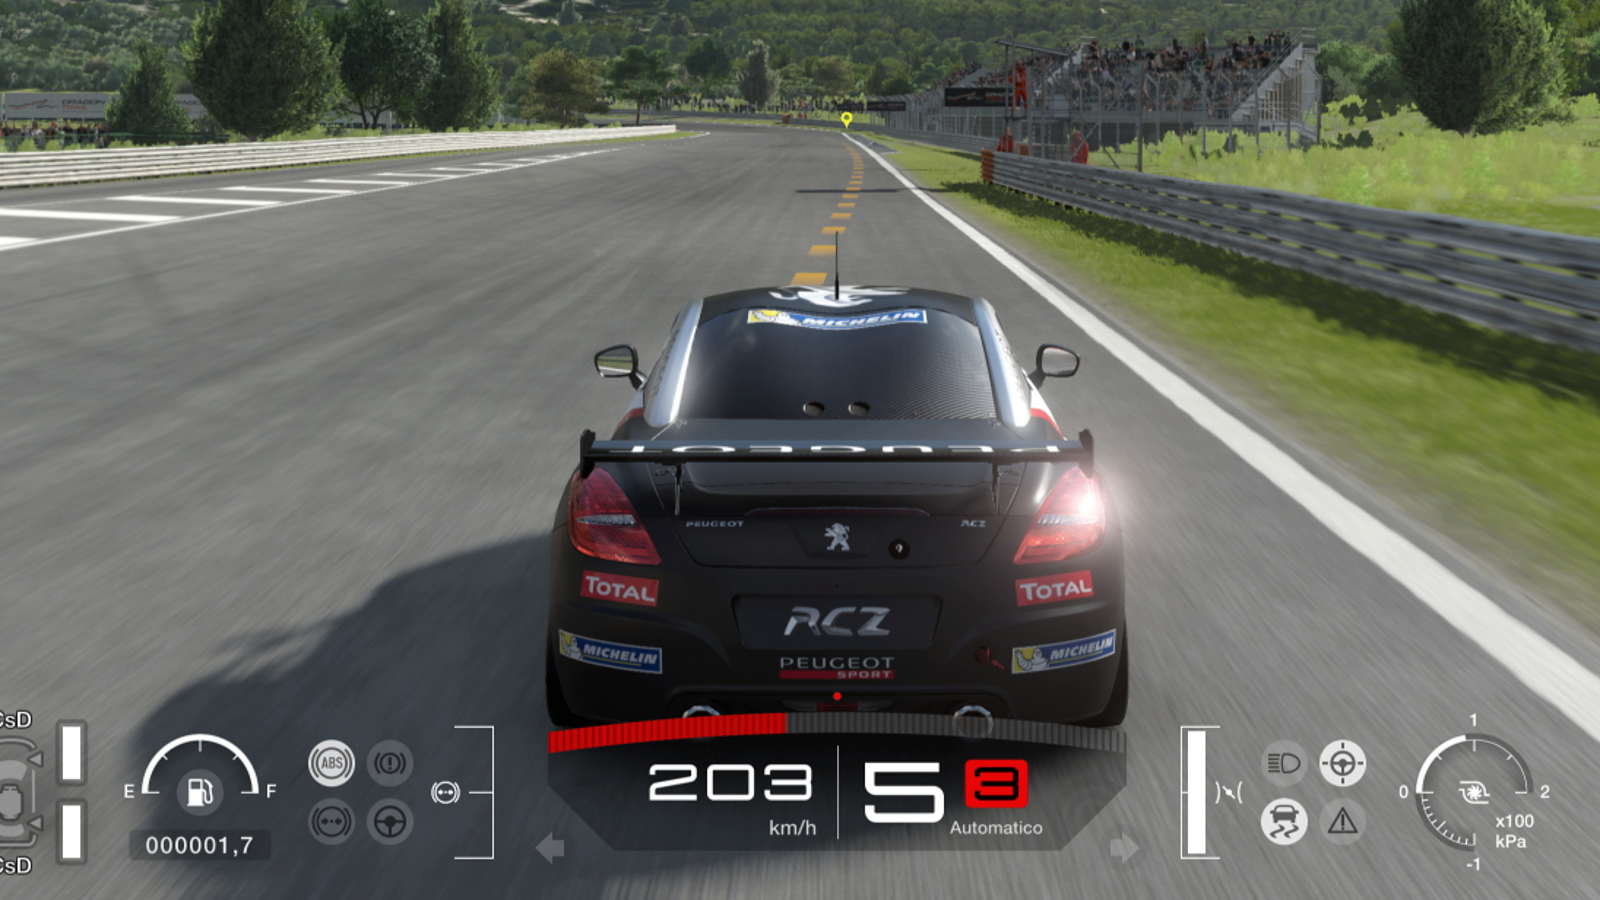 Gran Turismo 7 PS4 Gameplay  GT 7 Gameplay PS4 